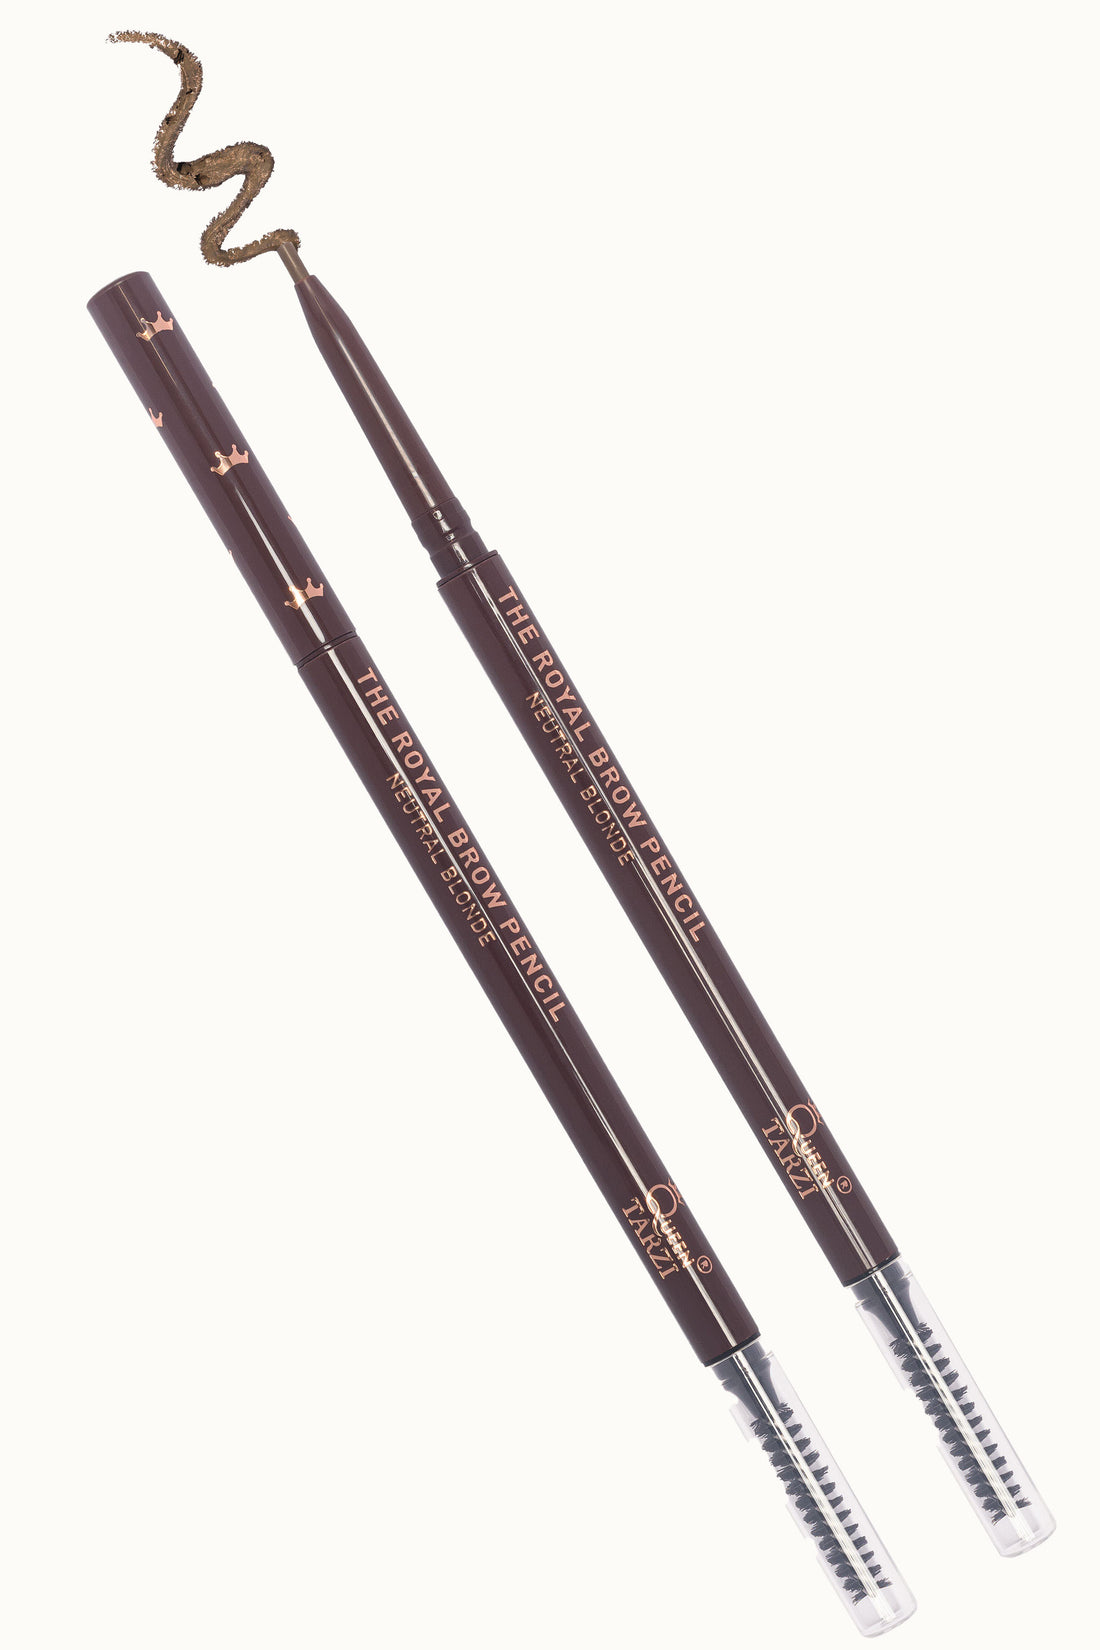 The Royal Brow Pencil